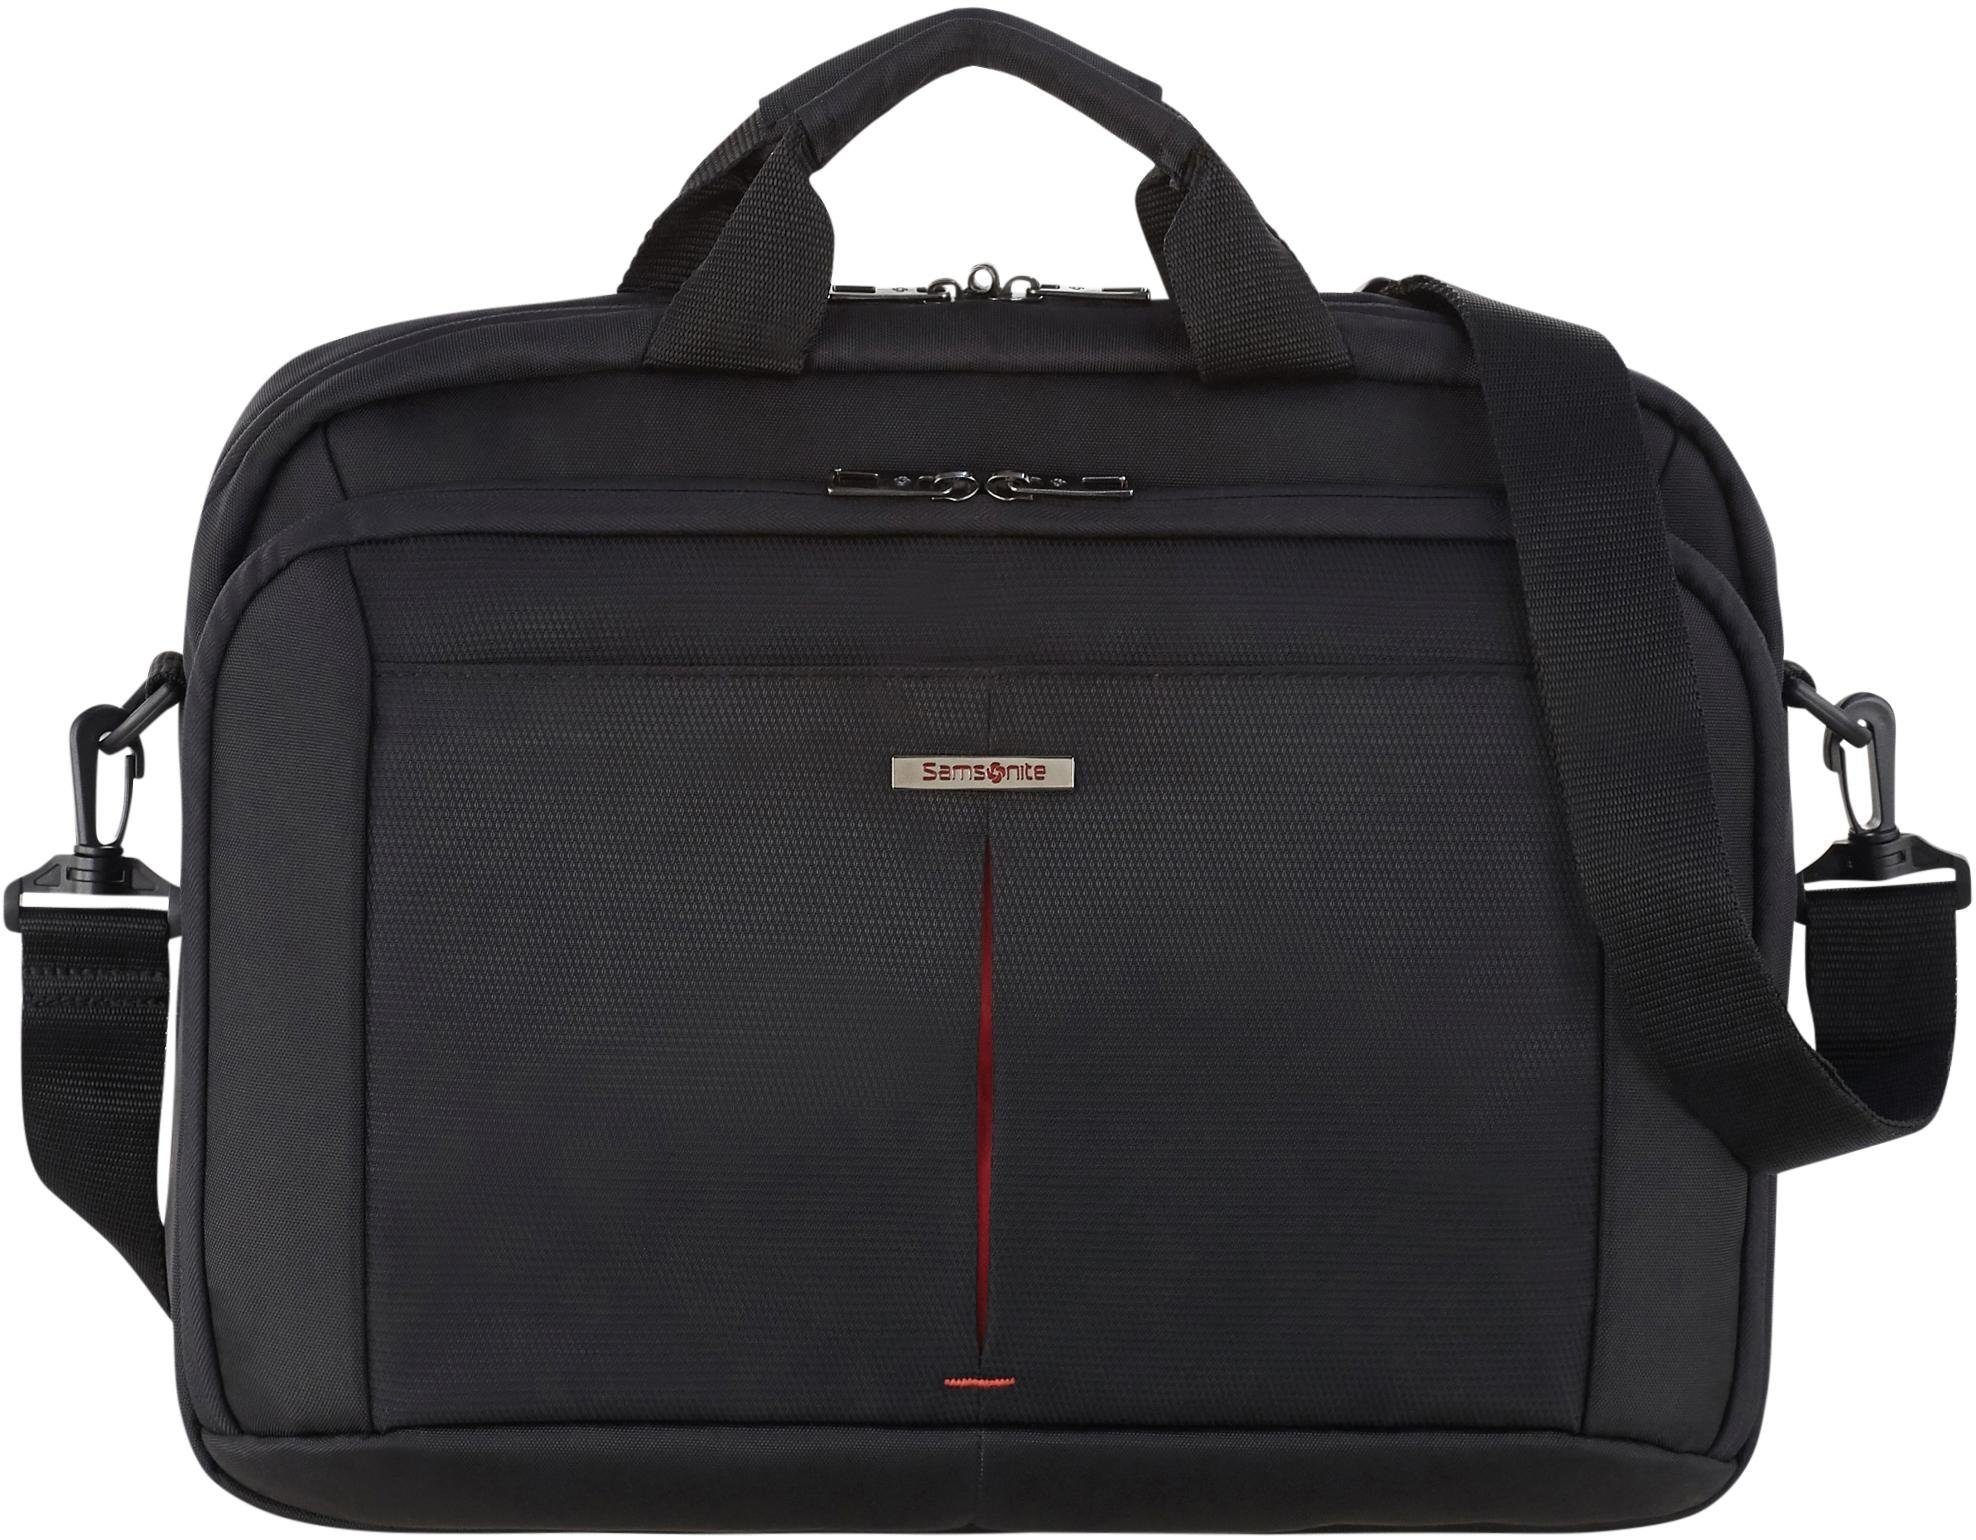 Samsonite Laptoptasche Guardit 2.0, 15.6, black, Laptop-Tragetasche Laptop-Case Laptop-Bag mit 15,6 Zoll Laptopfach